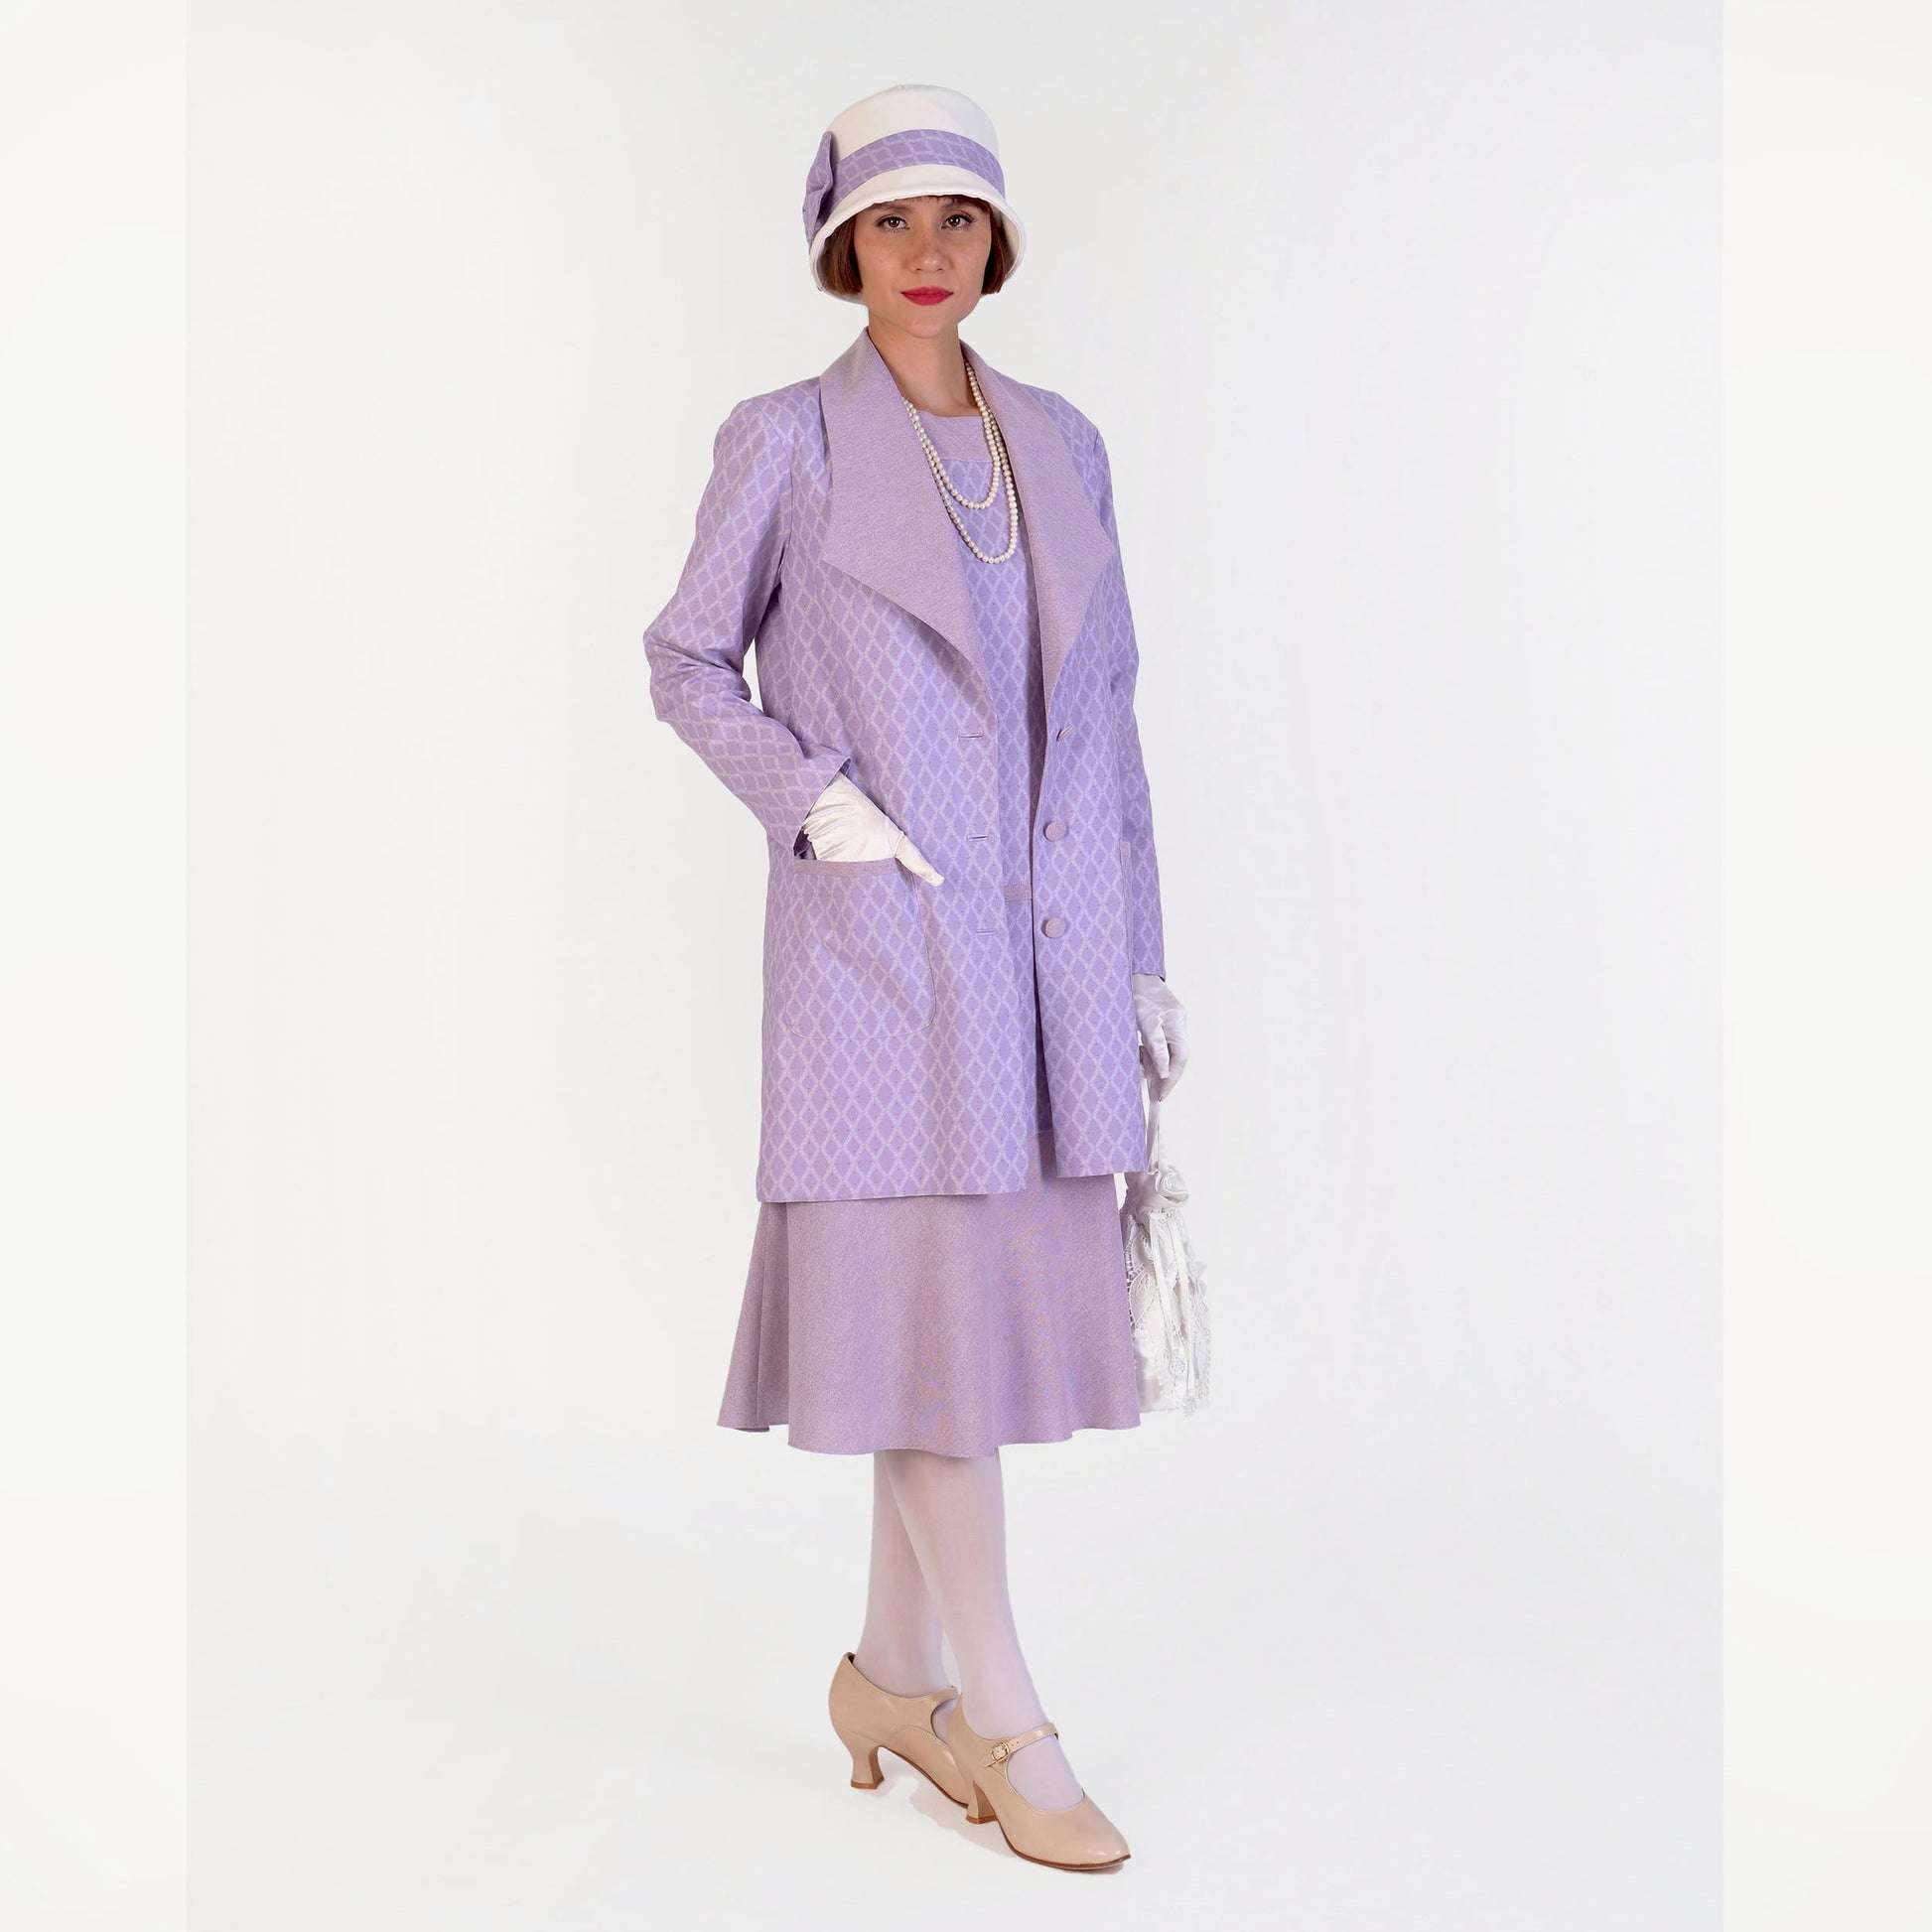 1920s cotton jacket - or 2-piece ensemble with dress - in light purple - a Roaring Twenties jacket